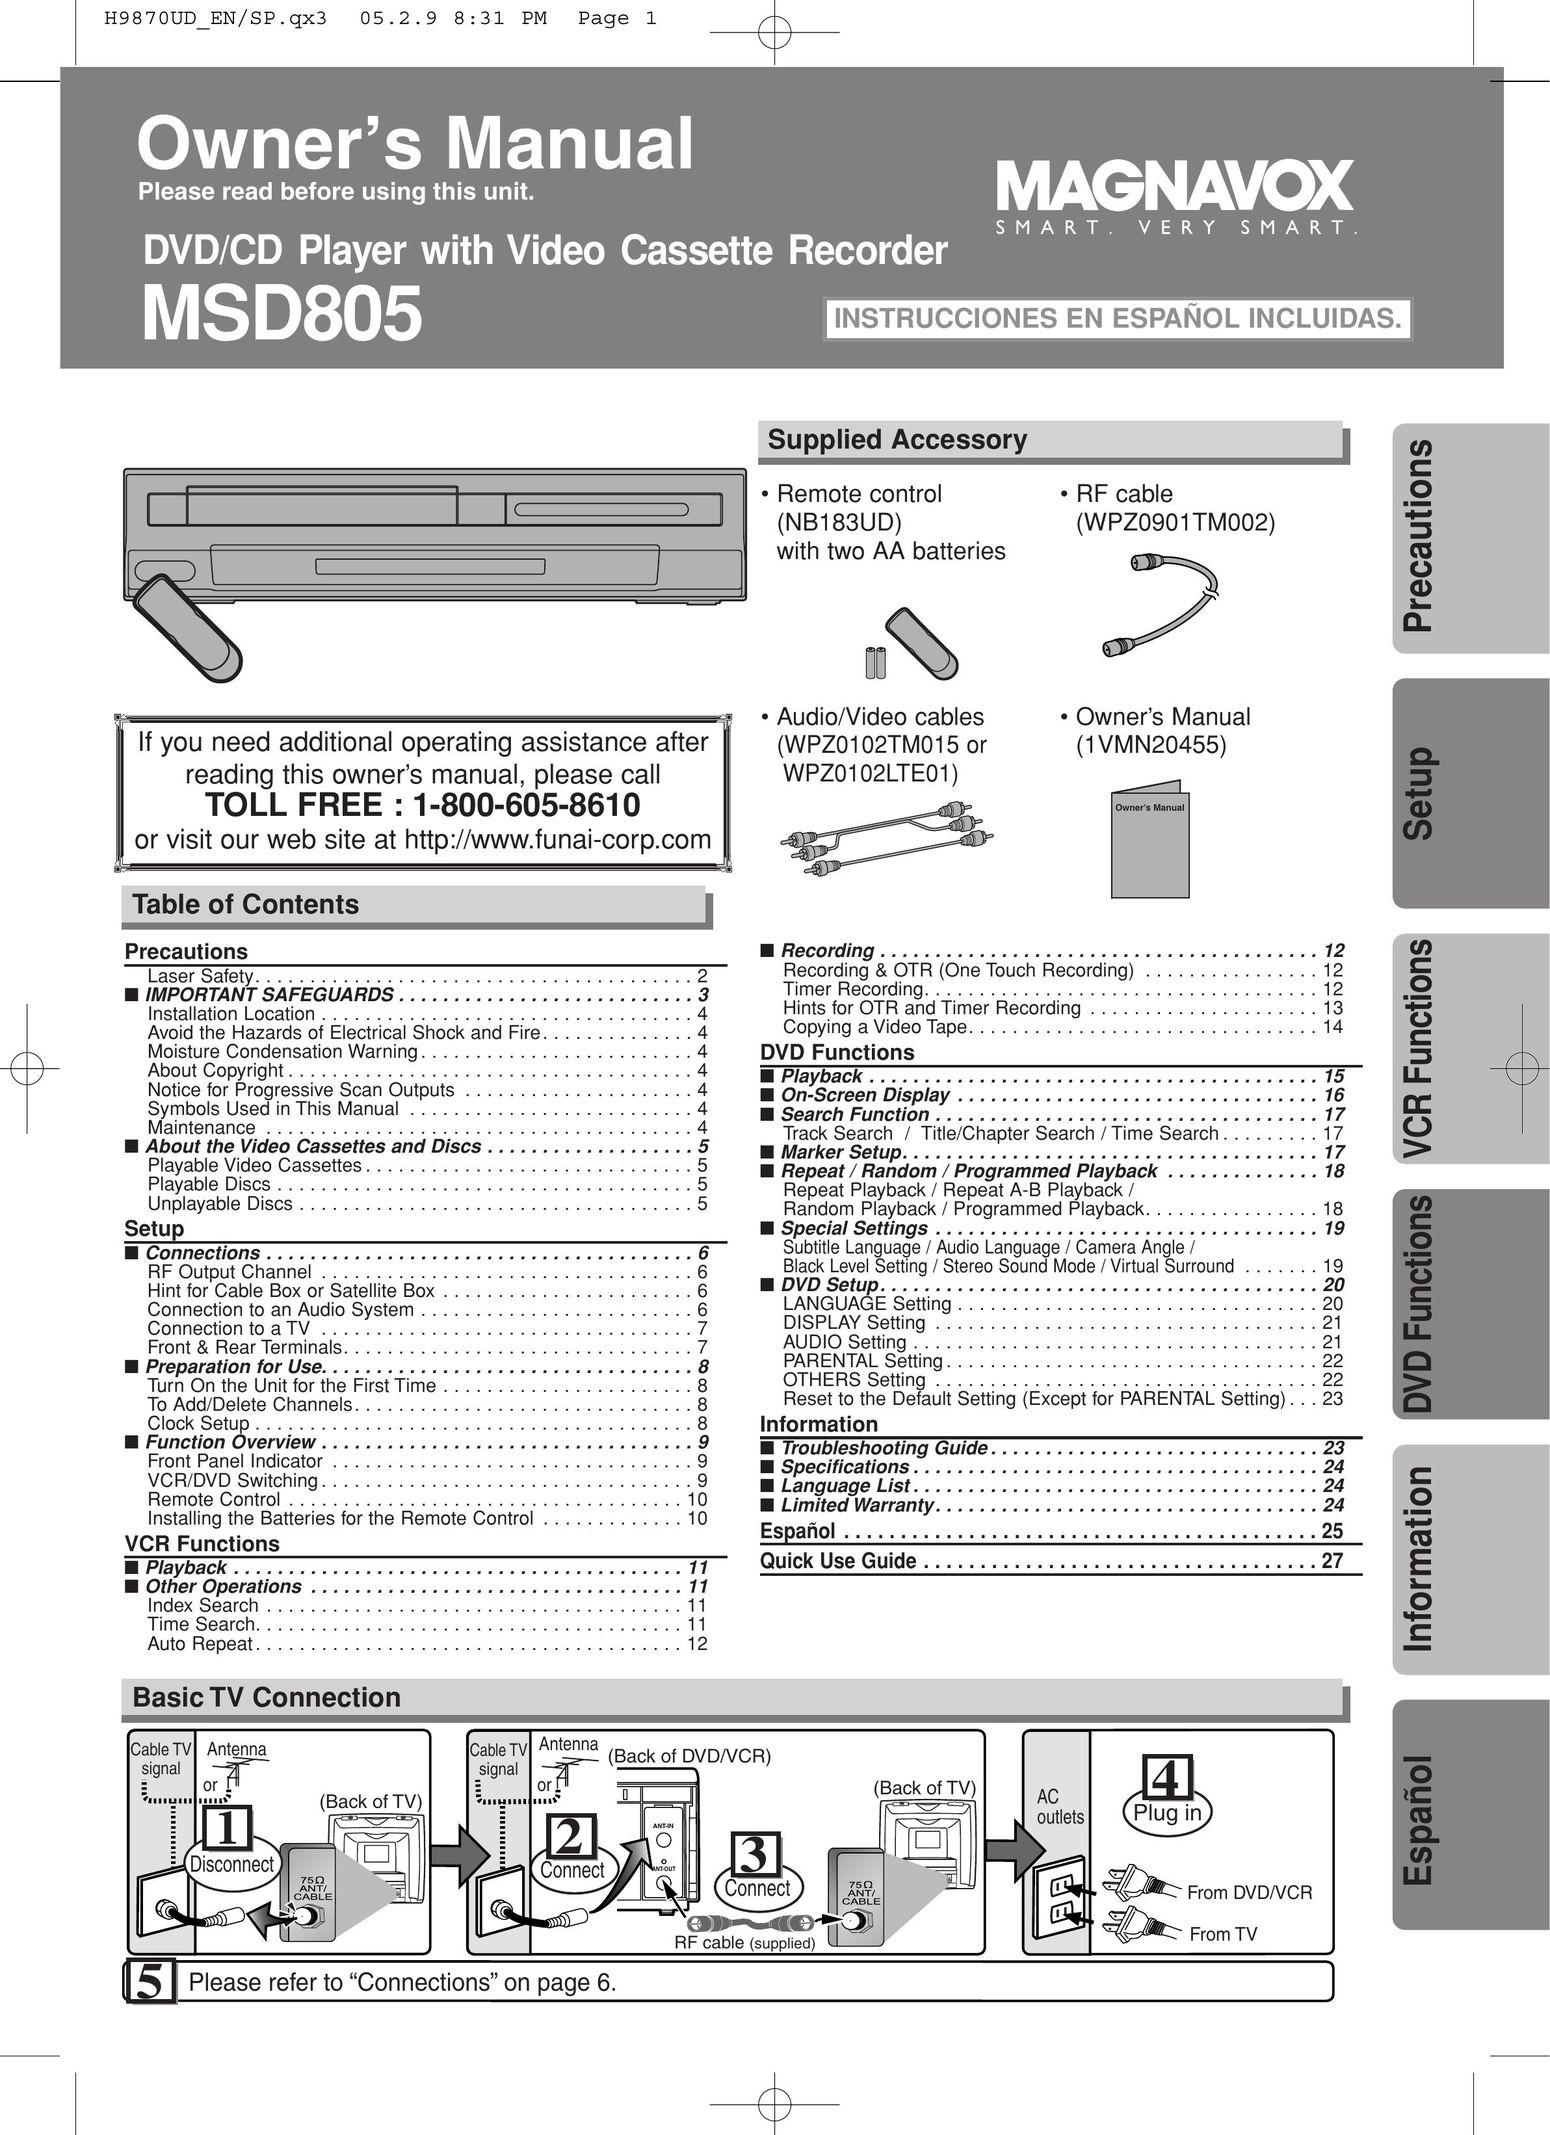 FUNAI MSD805 DVD VCR Combo User Manual